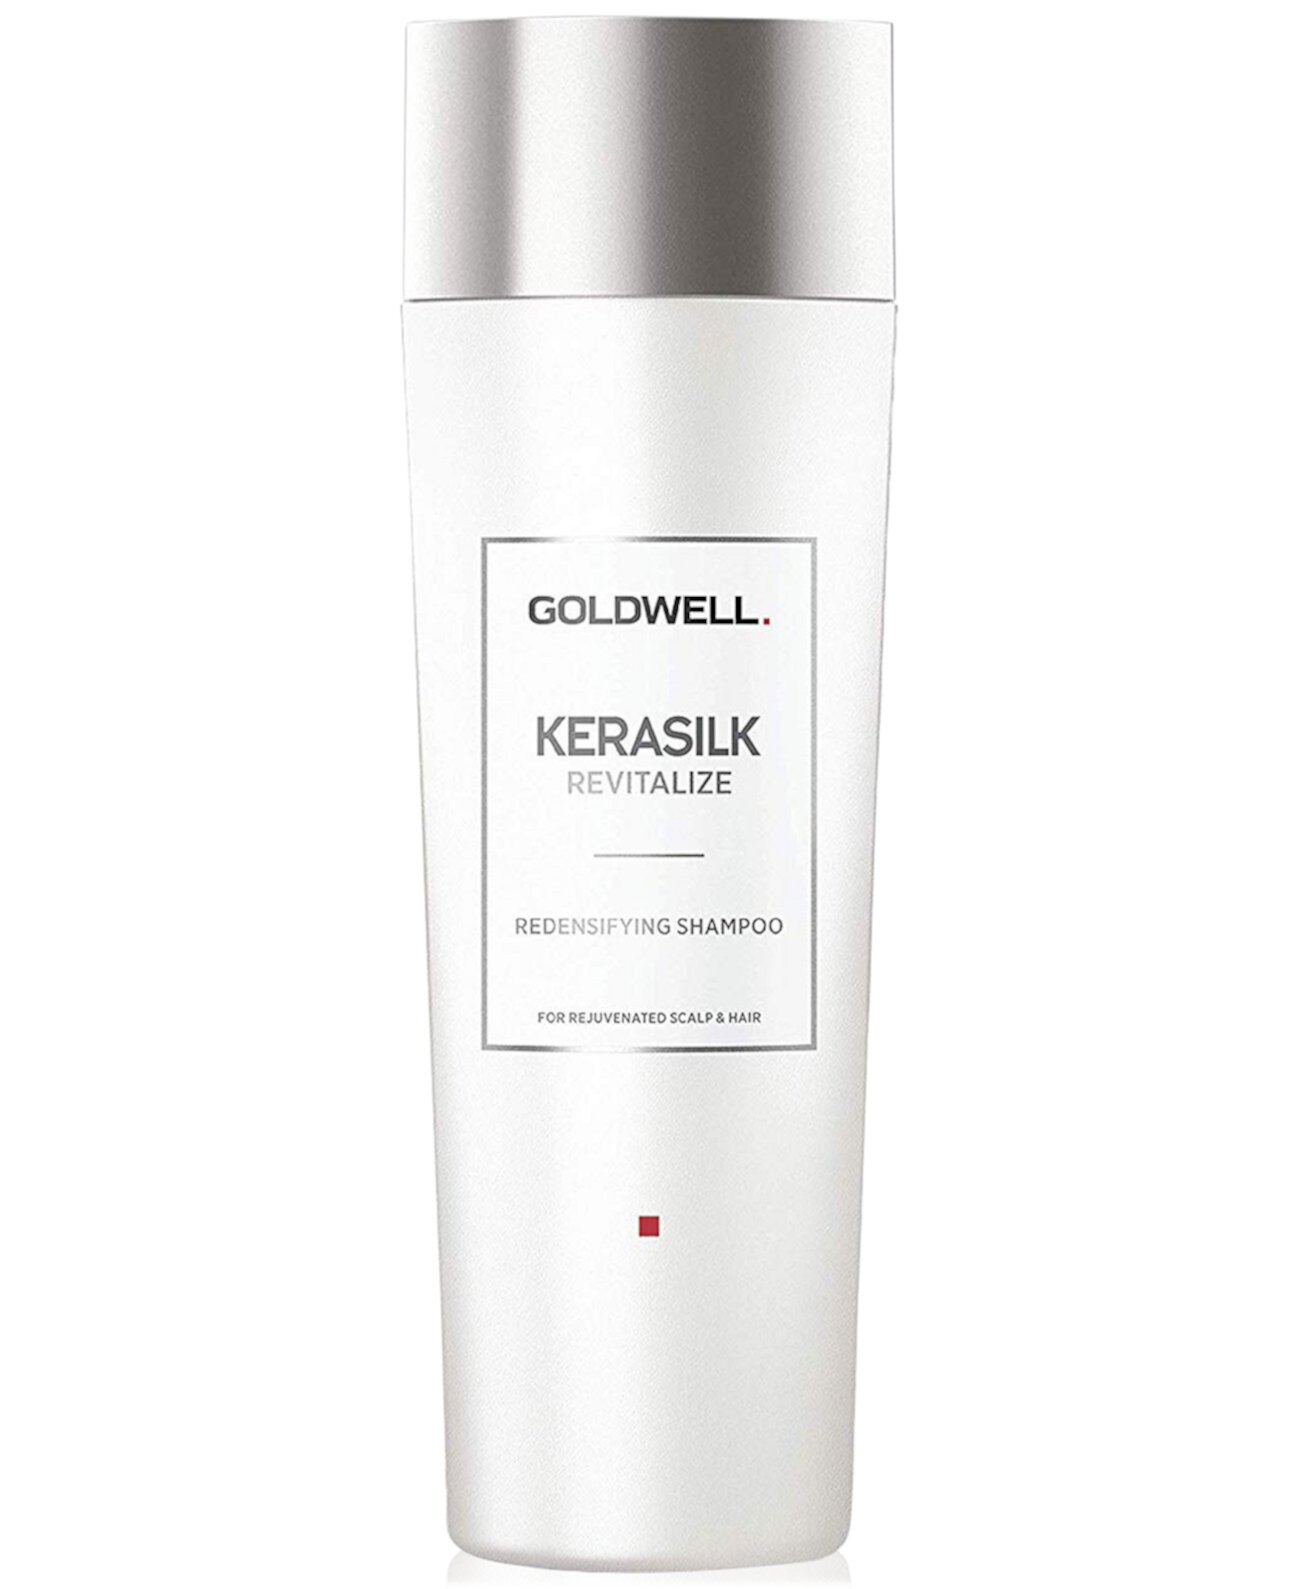 Kerasilk Revitalize Redensifying Shampoo, 8,5 унций, от PUREBEAUTY Salon & Spa Goldwell